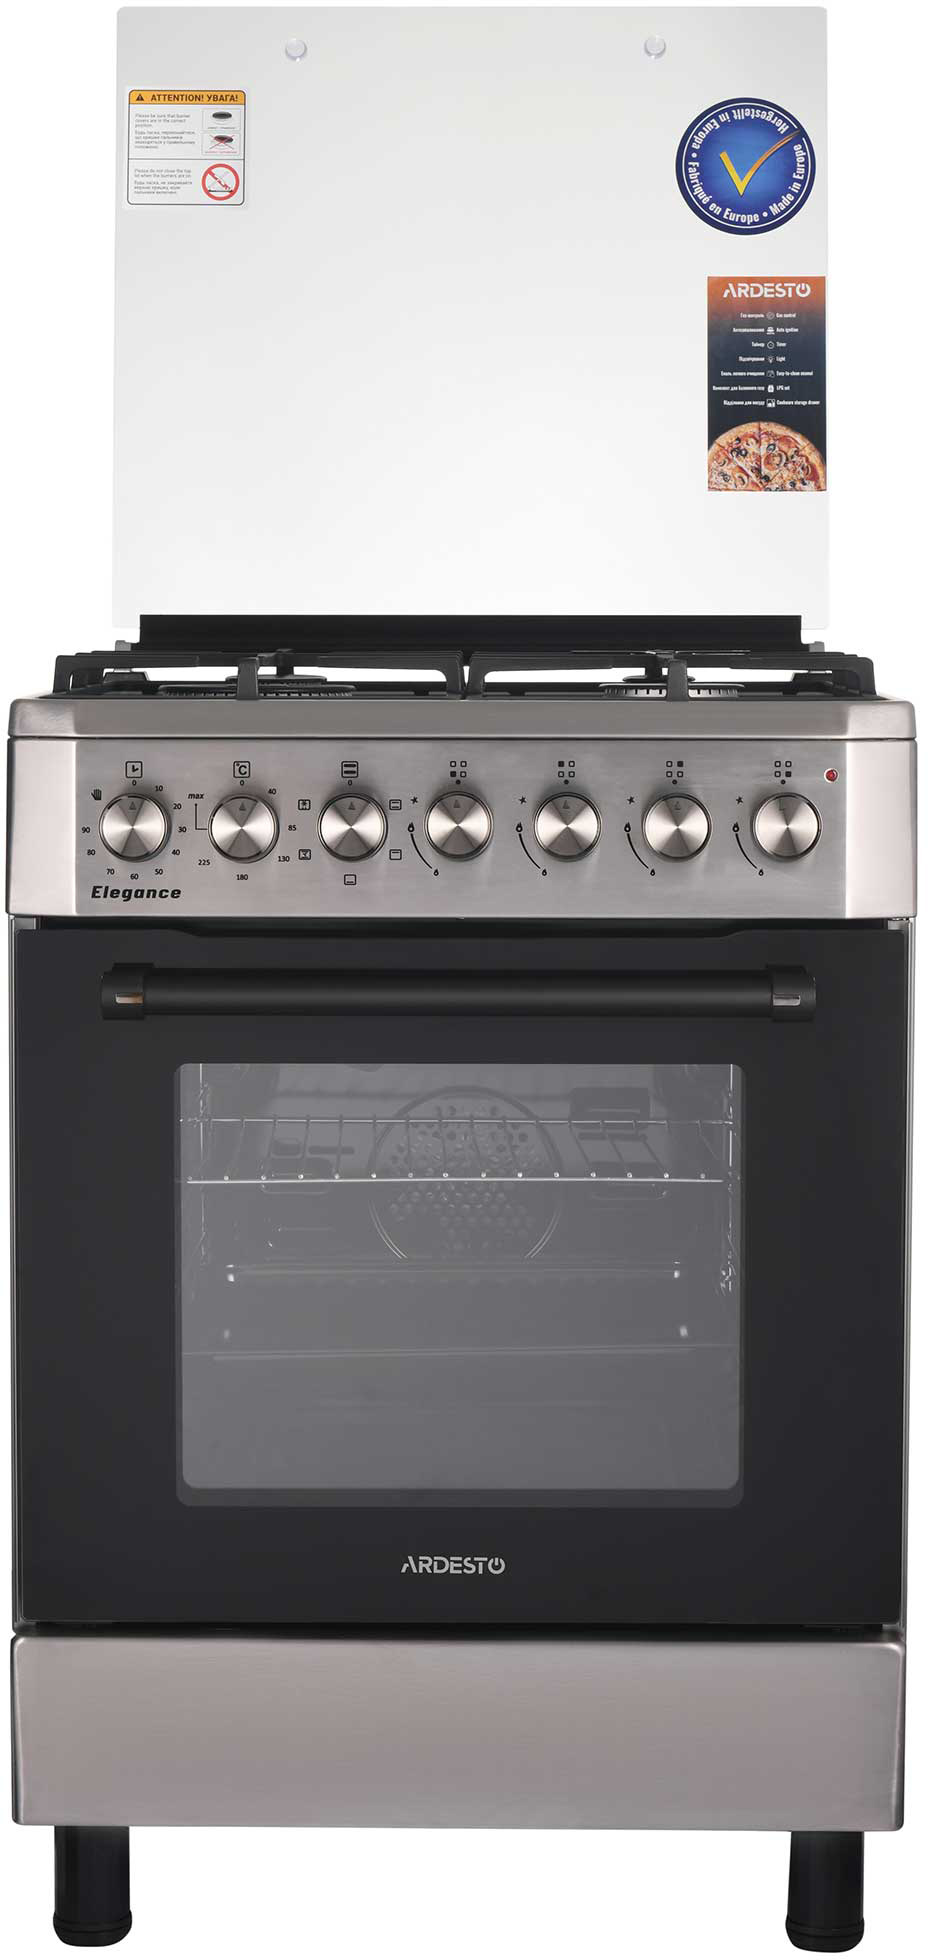 Кухонная плита Ardesto FSCF-C606ST в интернет-магазине, главное фото